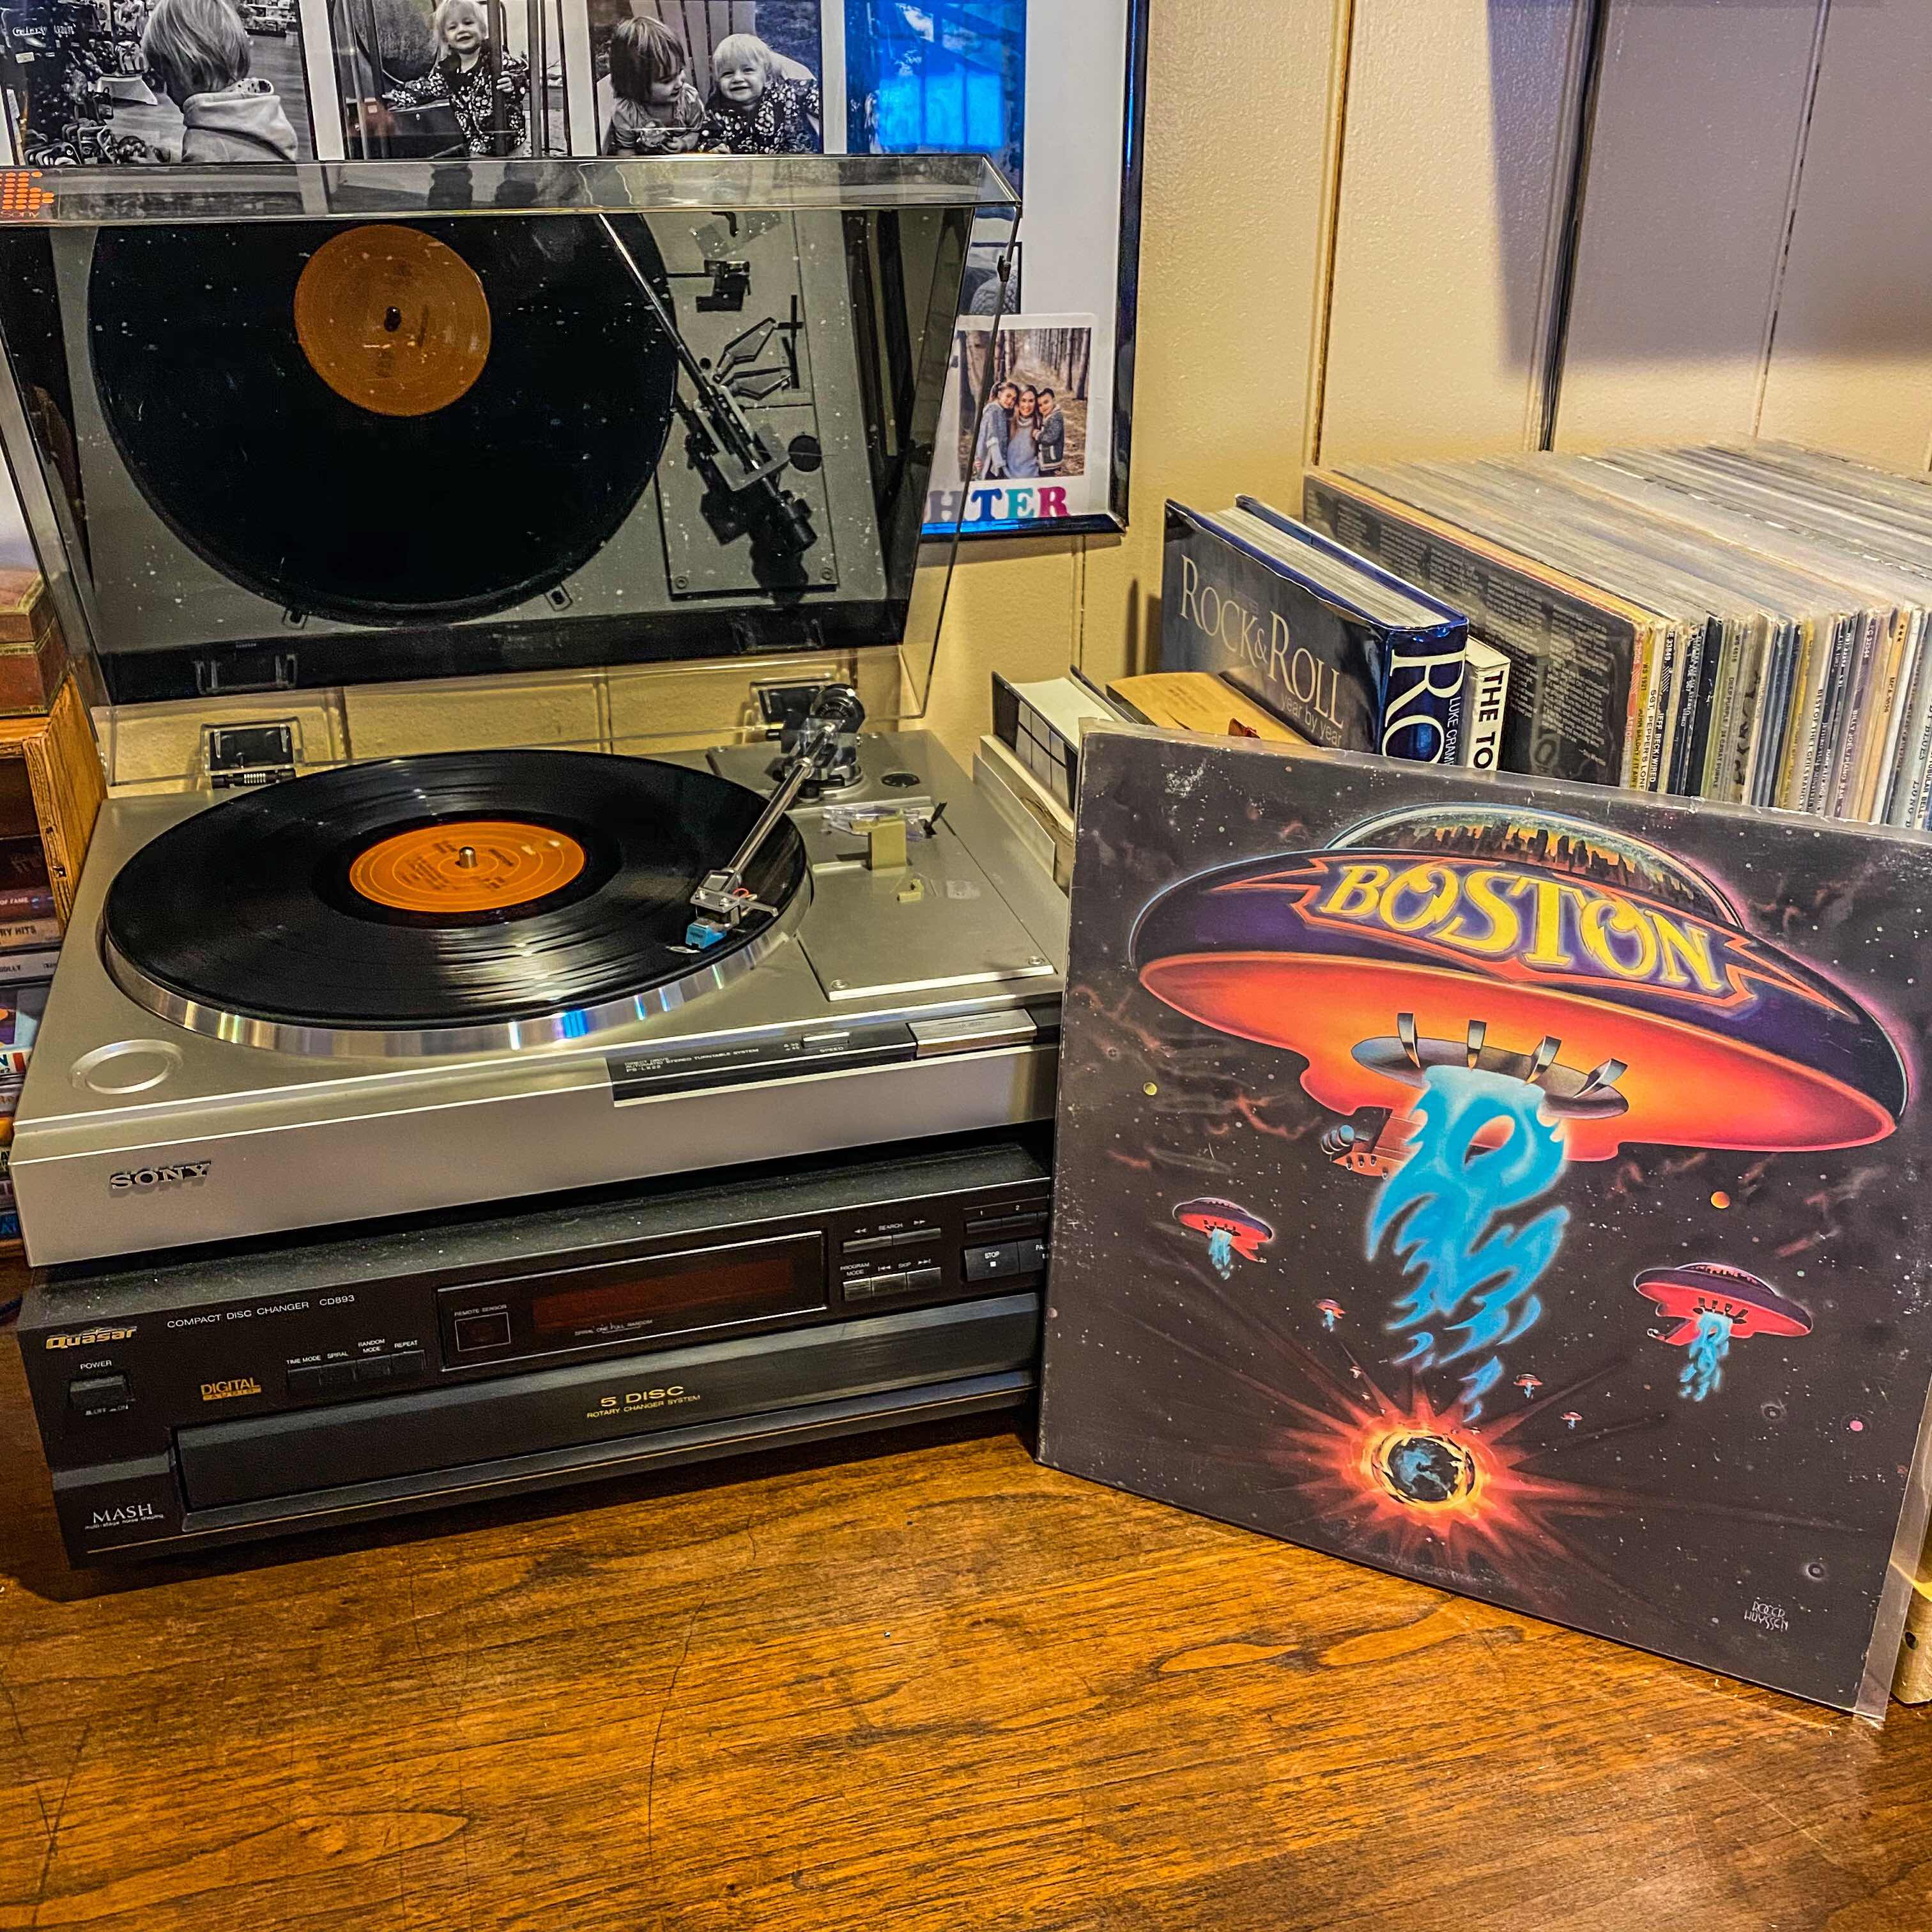 Boston Classic Rock Band on vinyl record turntable